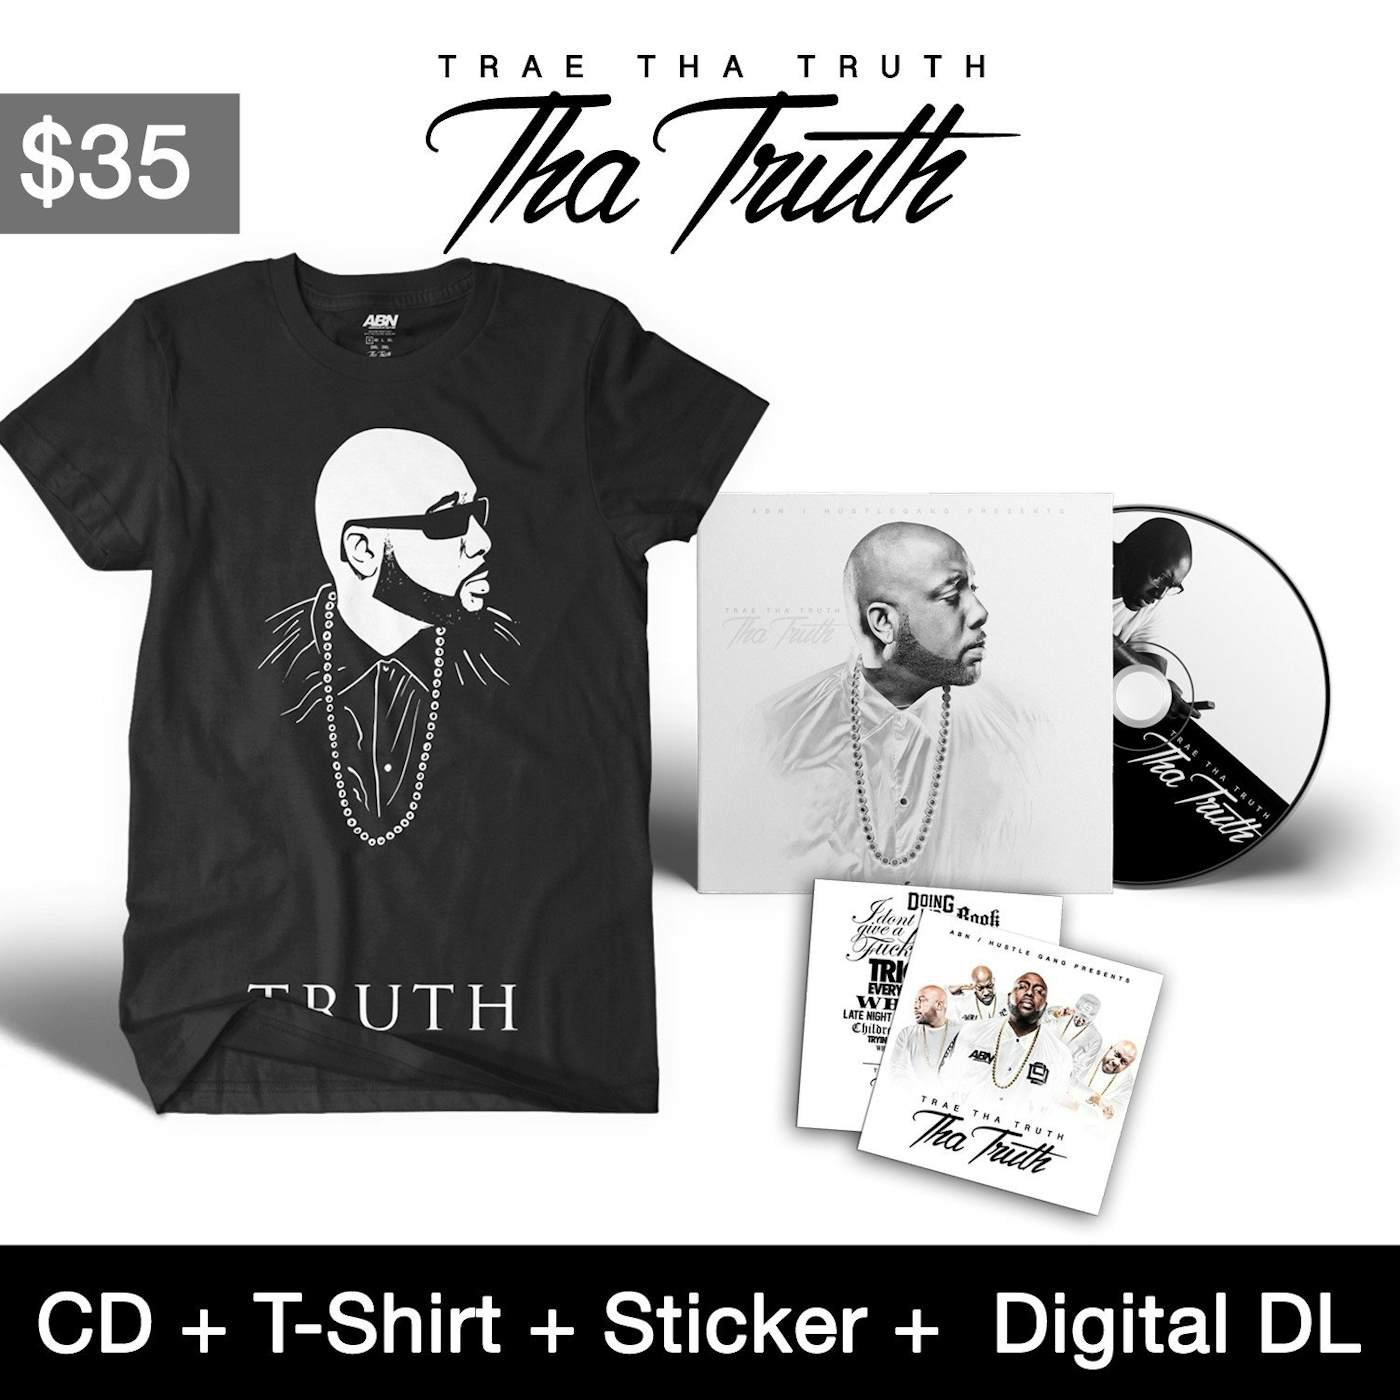 Trae tha Truth & The Worlds Freshest - "Tha Truth" CD + T-Shirt Bundle